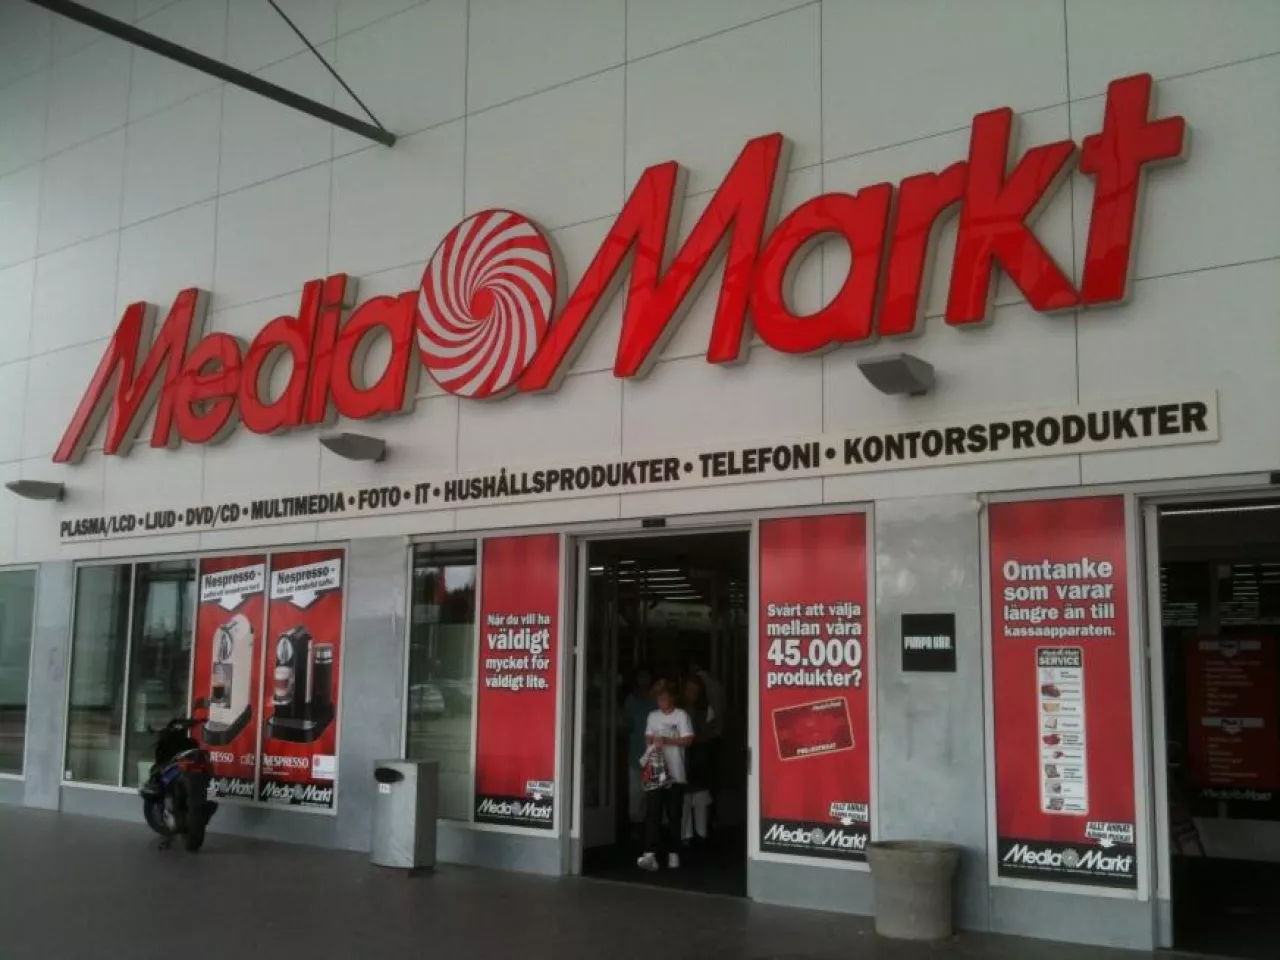 MediaMarkt w centrum handlowym w Göteborgu (By Gaisjonke (Own work) [CC BY 3.0 (http://creativecommons.org/licenses/by/3.0)], via Wikimedia Commons)